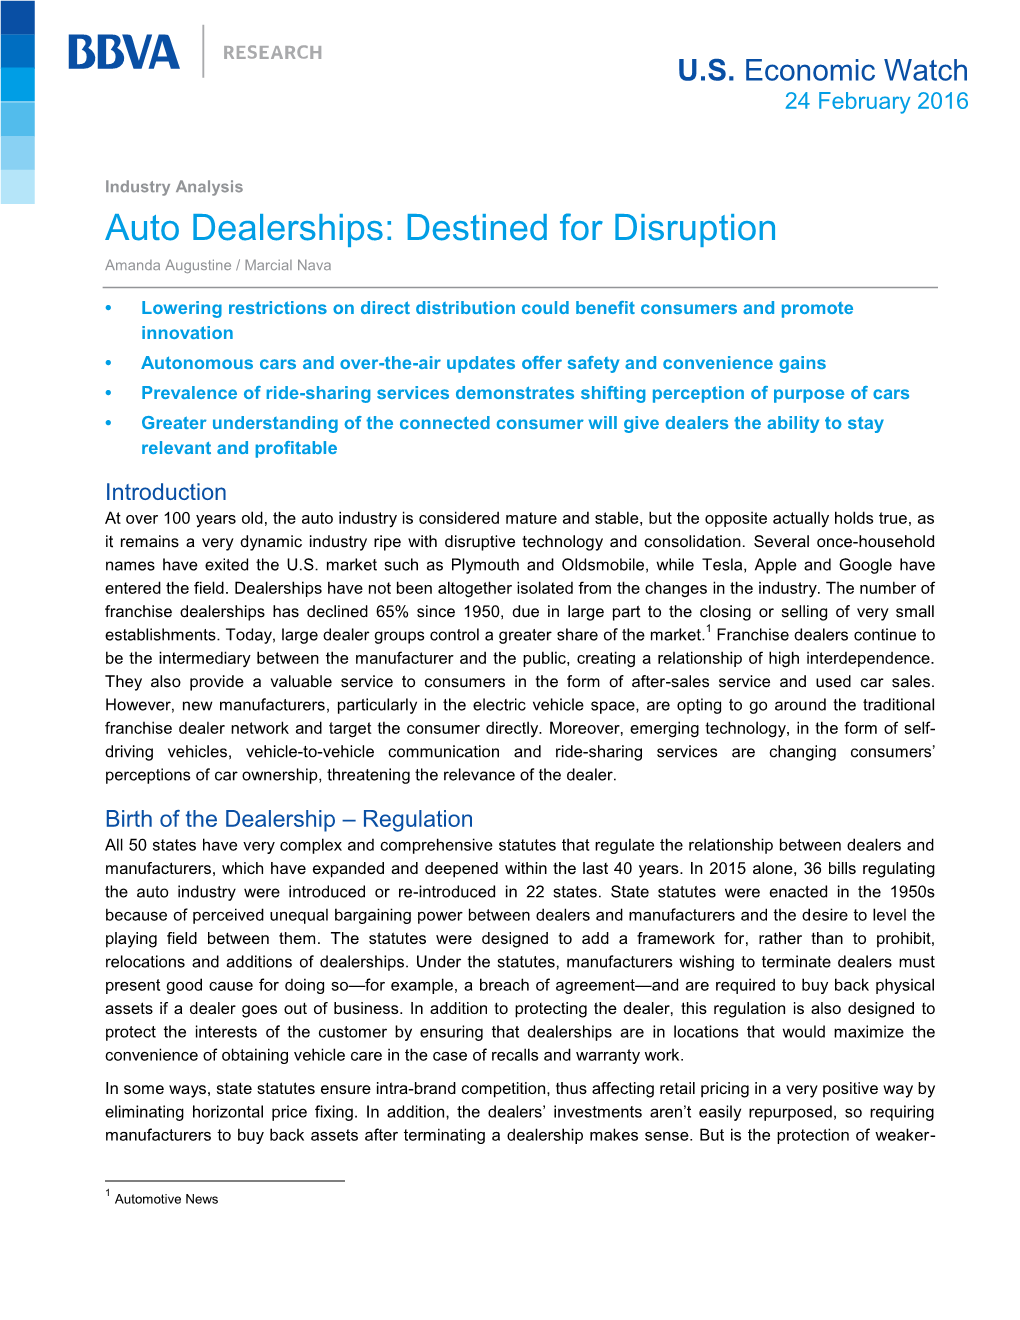 Auto Dealerships: Destined for Disruption Amanda Augustine / Marcial Nava